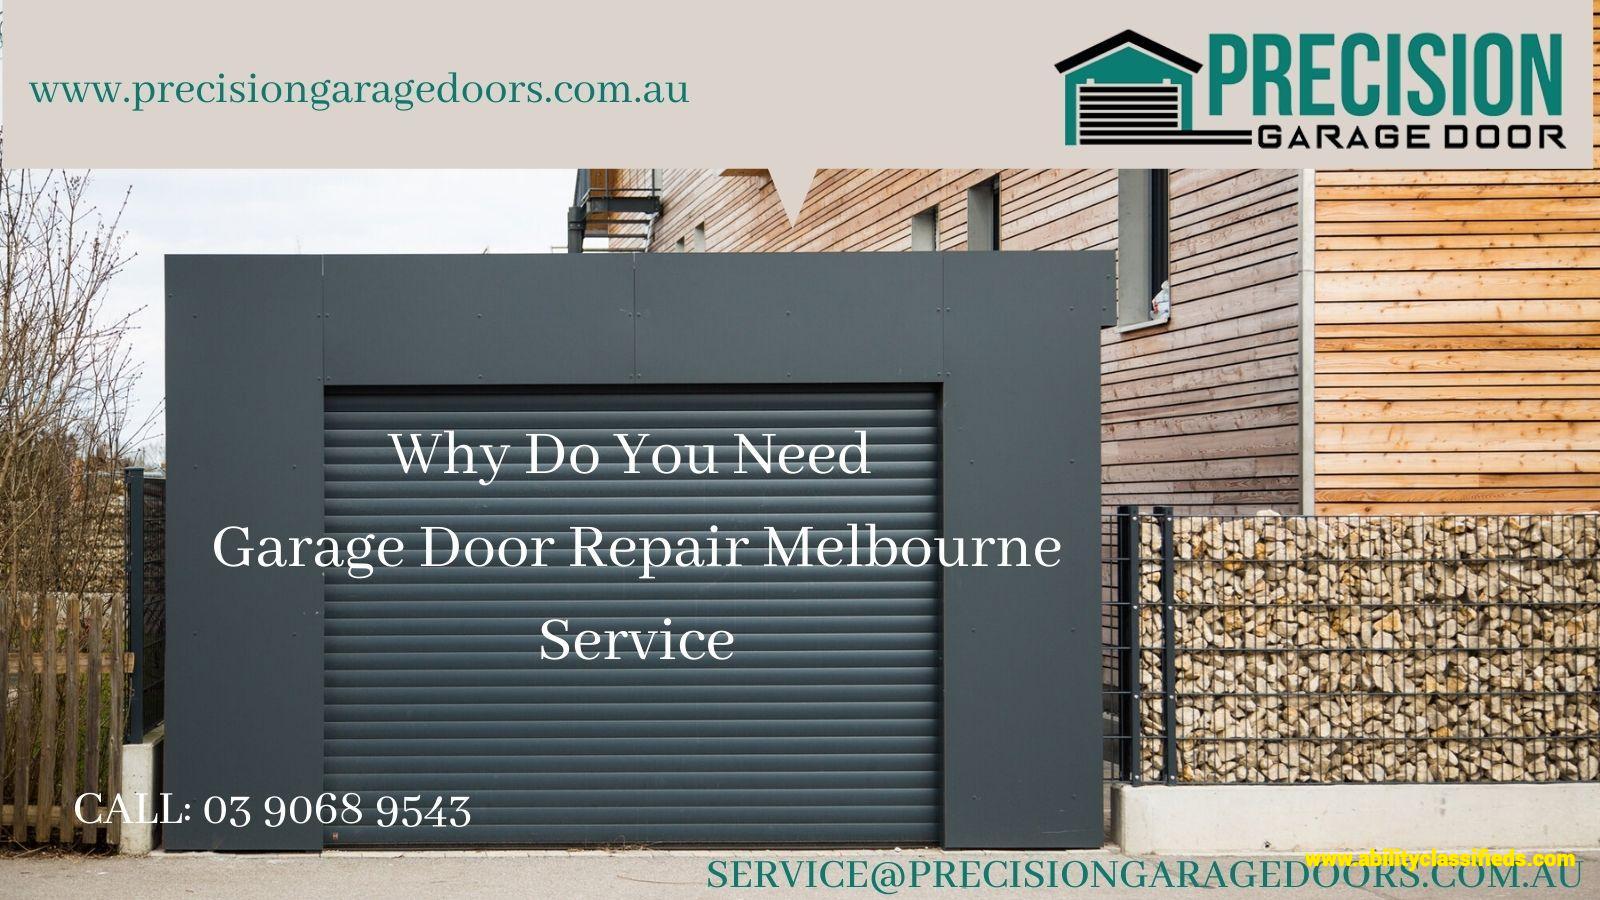 Why Do You Need Garage Door Repair Melbourne Service